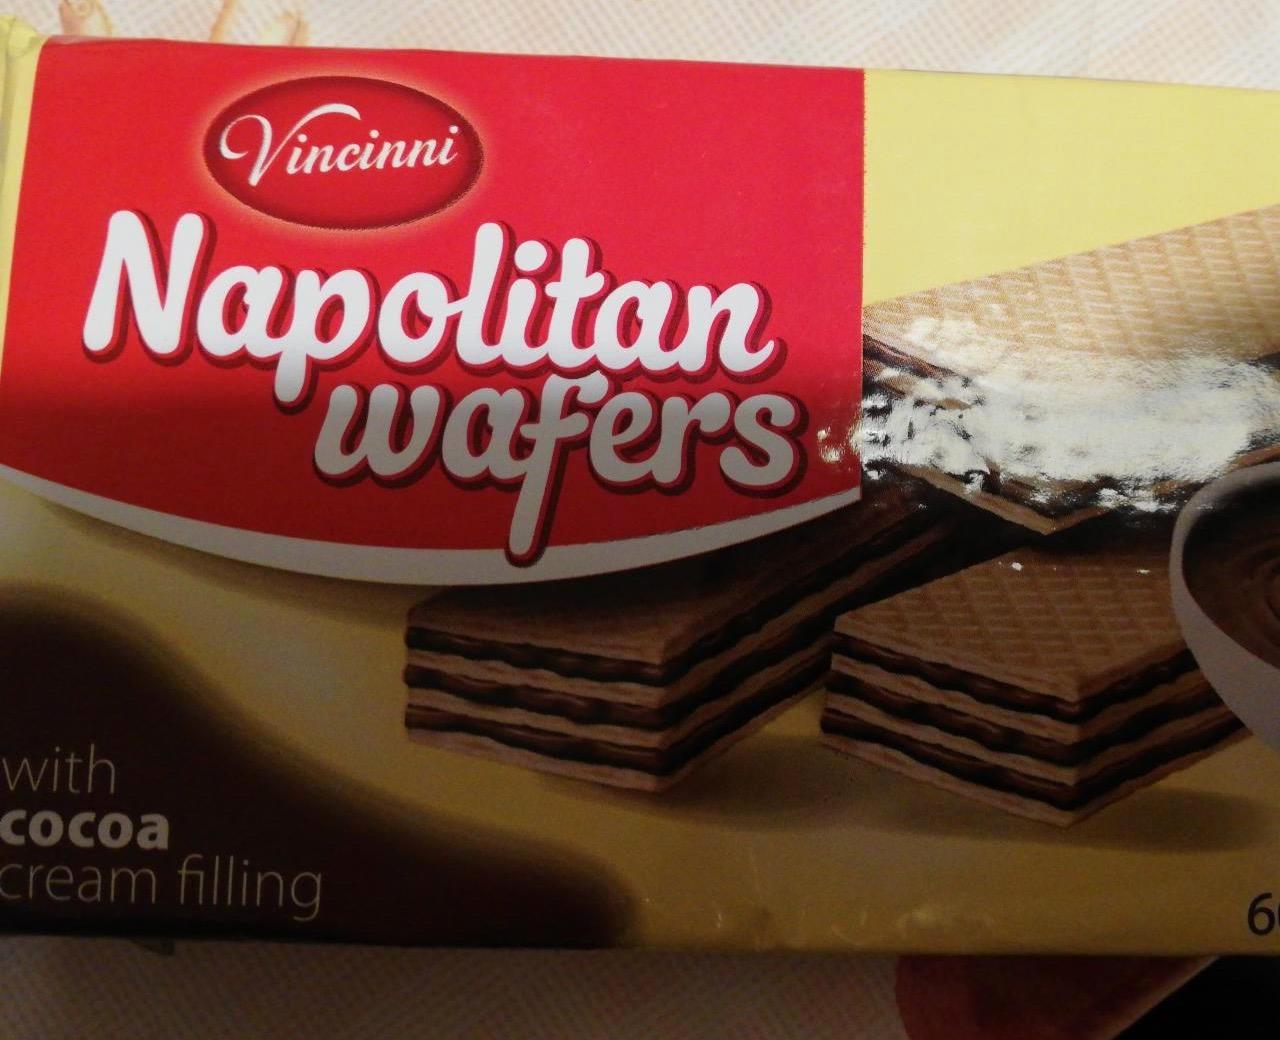 Képek - Napolitan wafers Cocoa Vincinni